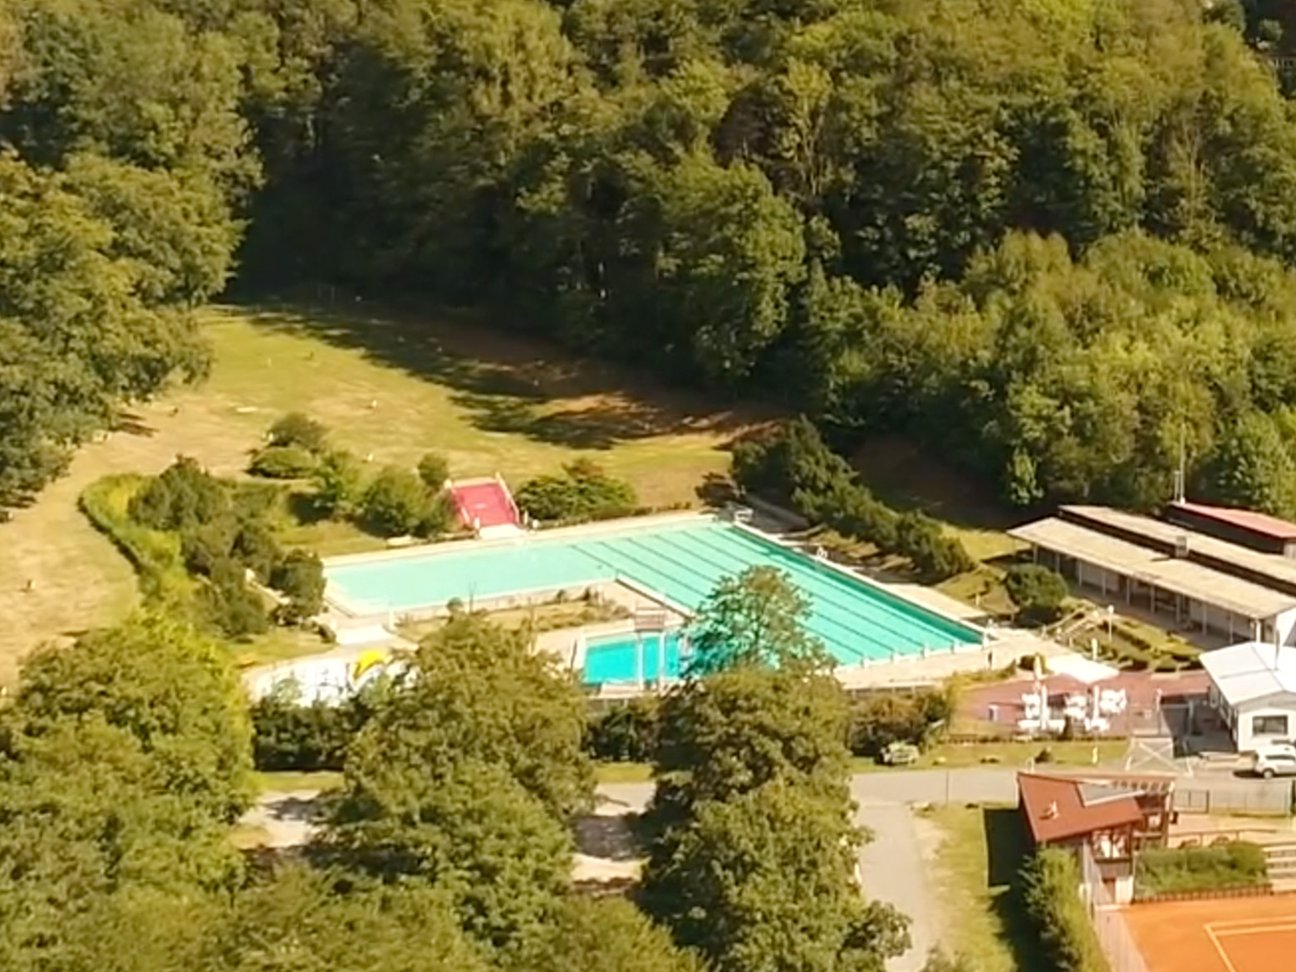 terassencamping-schlierbach-freibad-schwimmbad-lindenfels